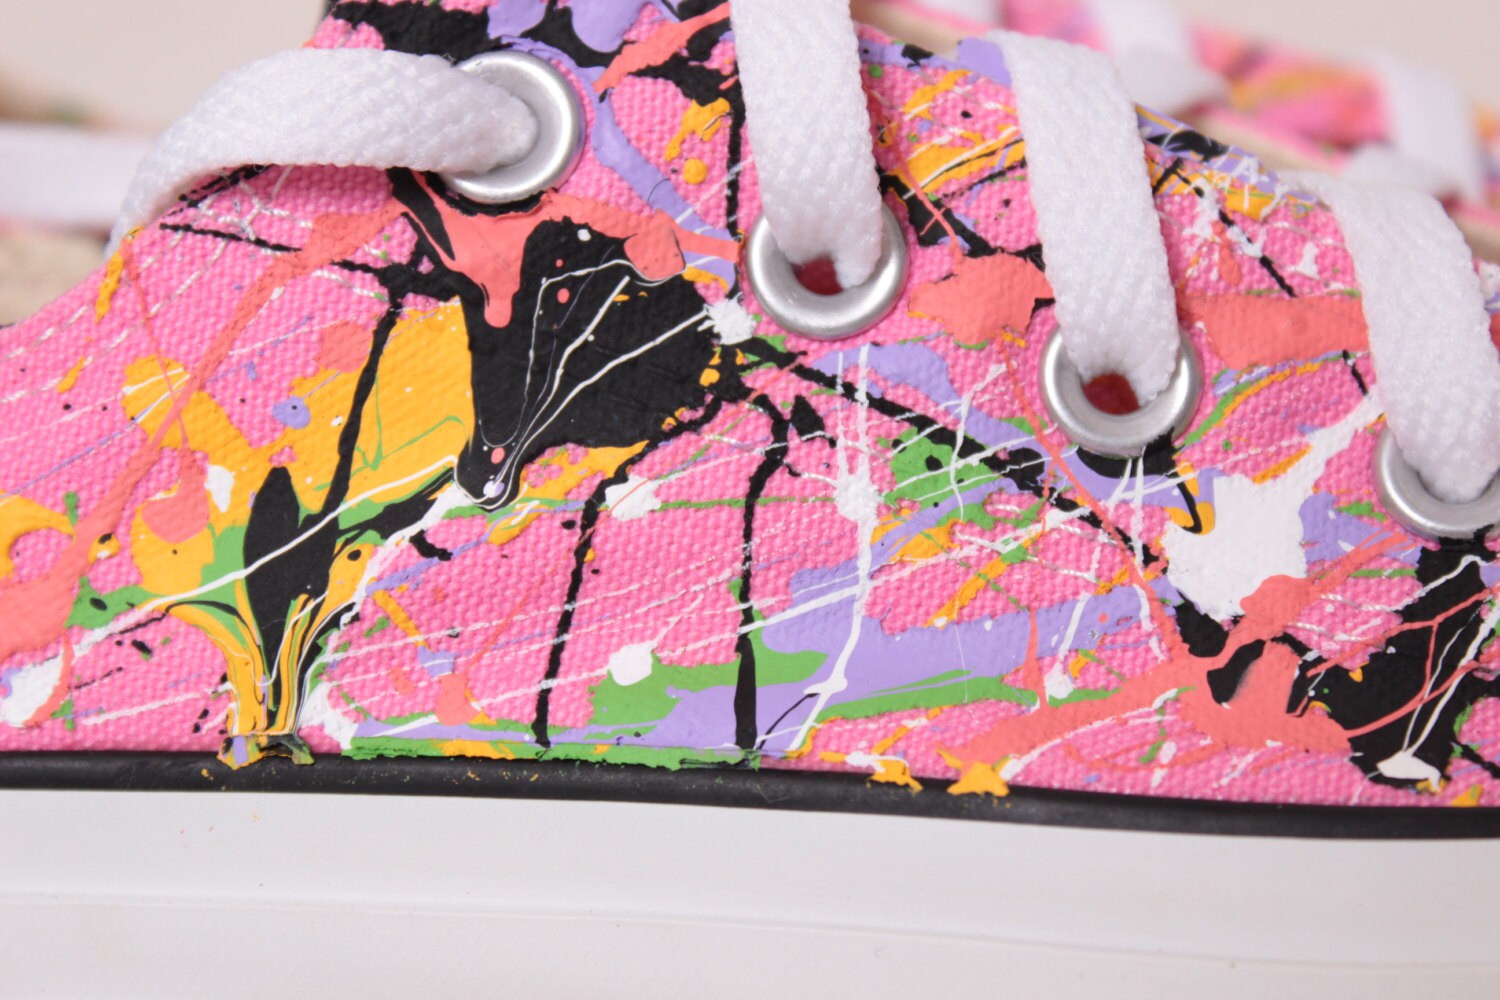 Converse All Star Low Top Canvas Sneaker Paint Splatter Neon Pink